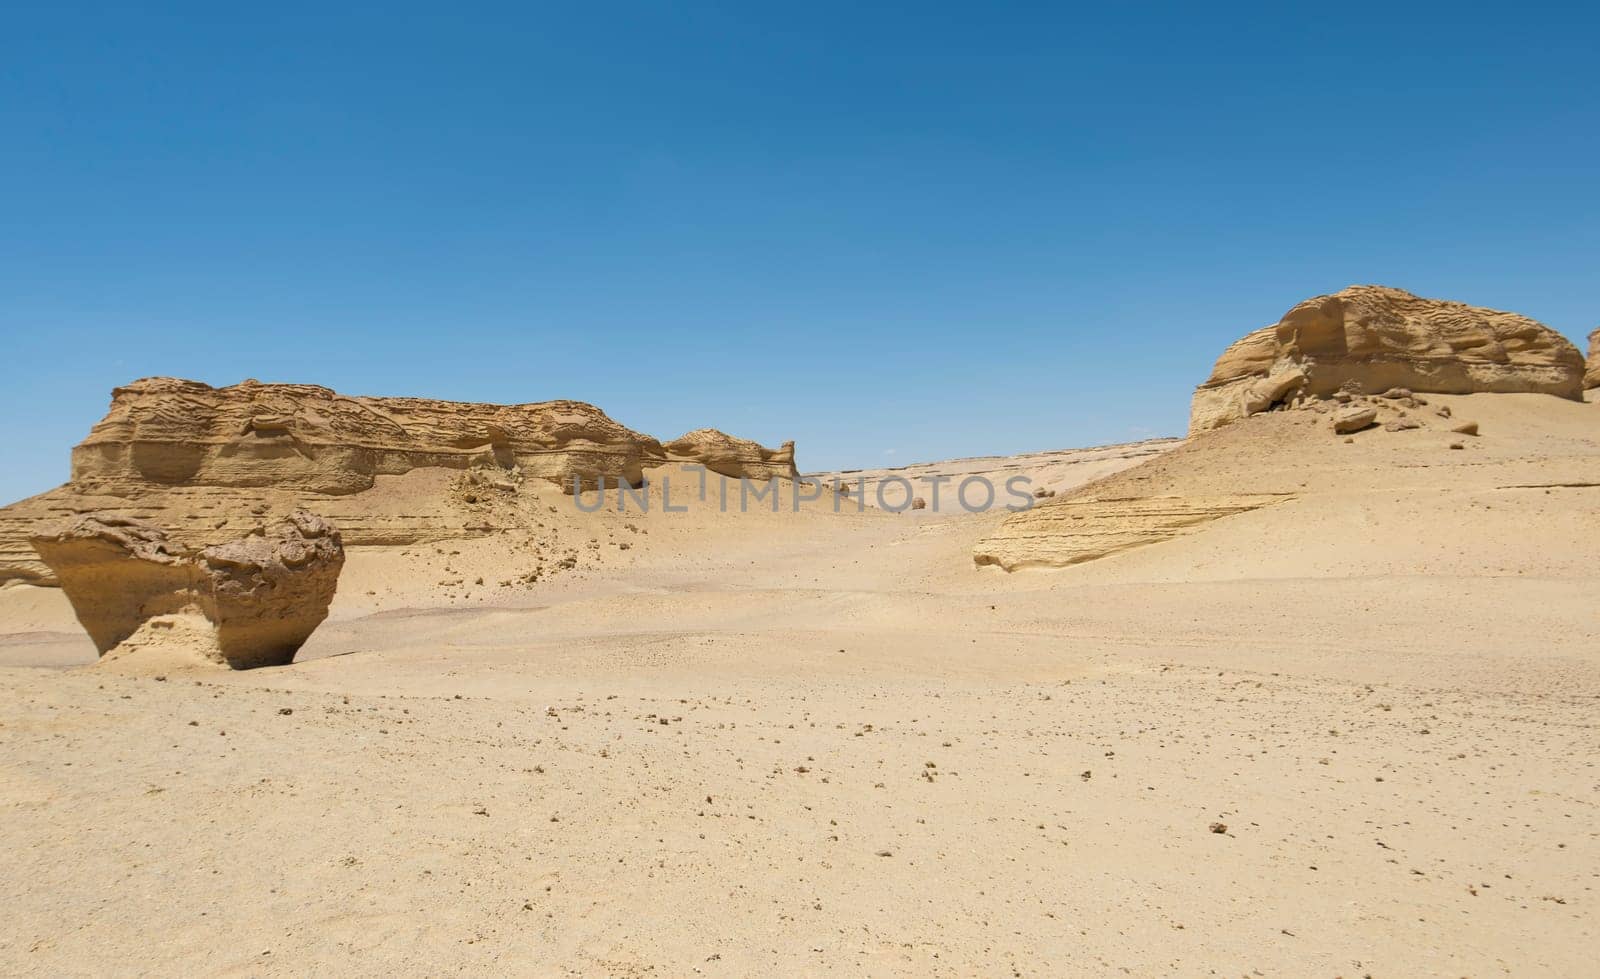 Barren desert landscape in hot climate with mountain rock formation by paulvinten